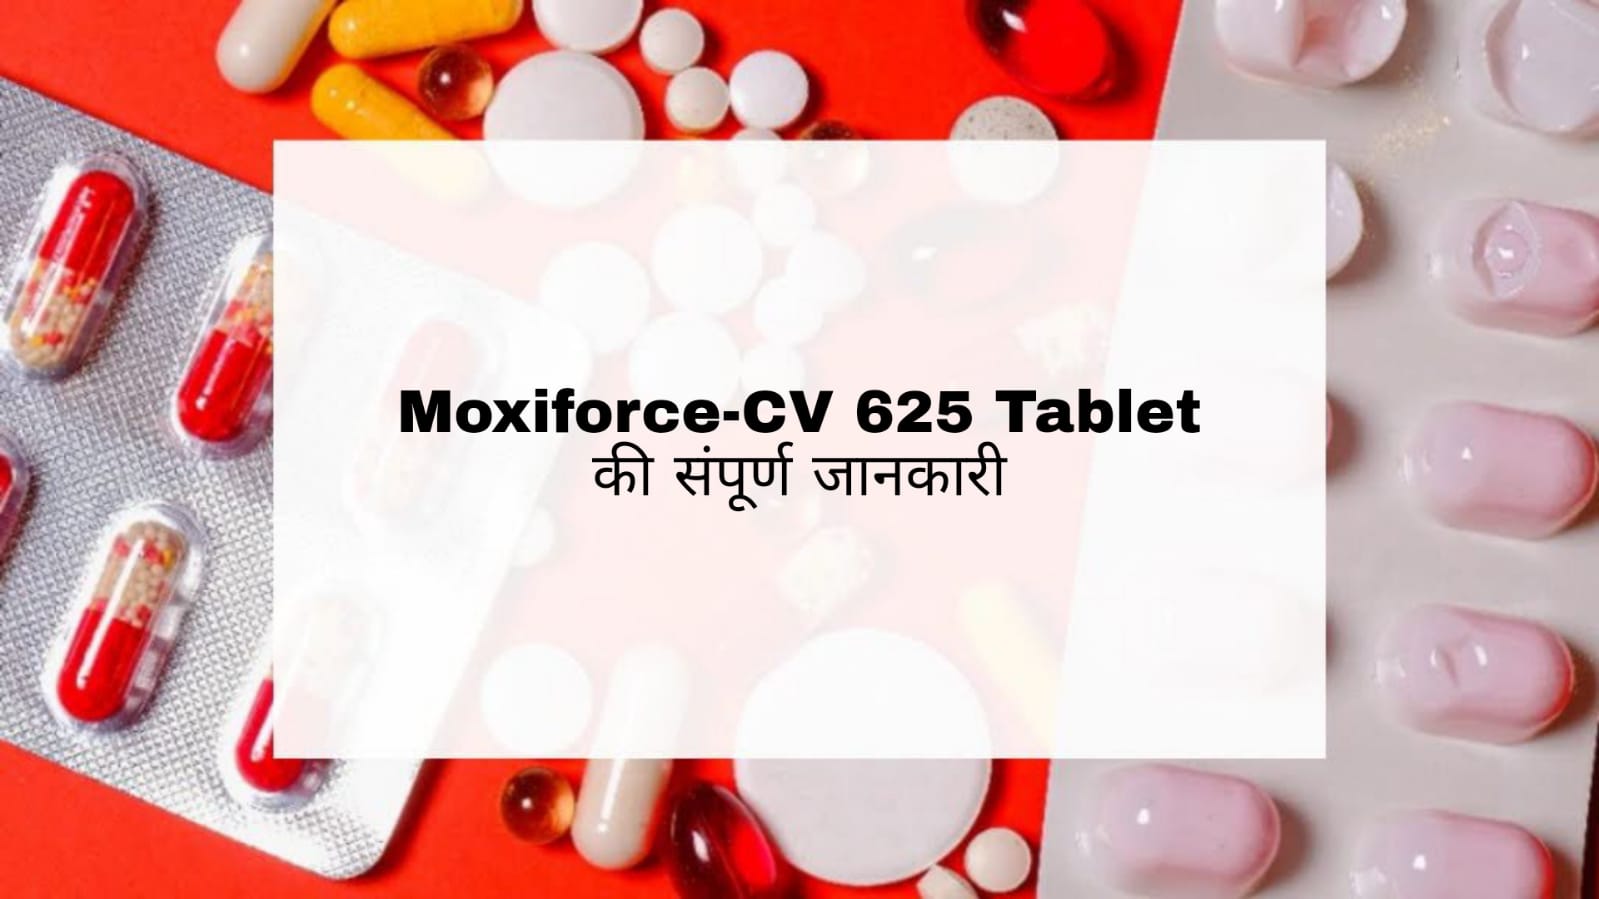 Moxiforce-CV 625 Tablet in Hindi